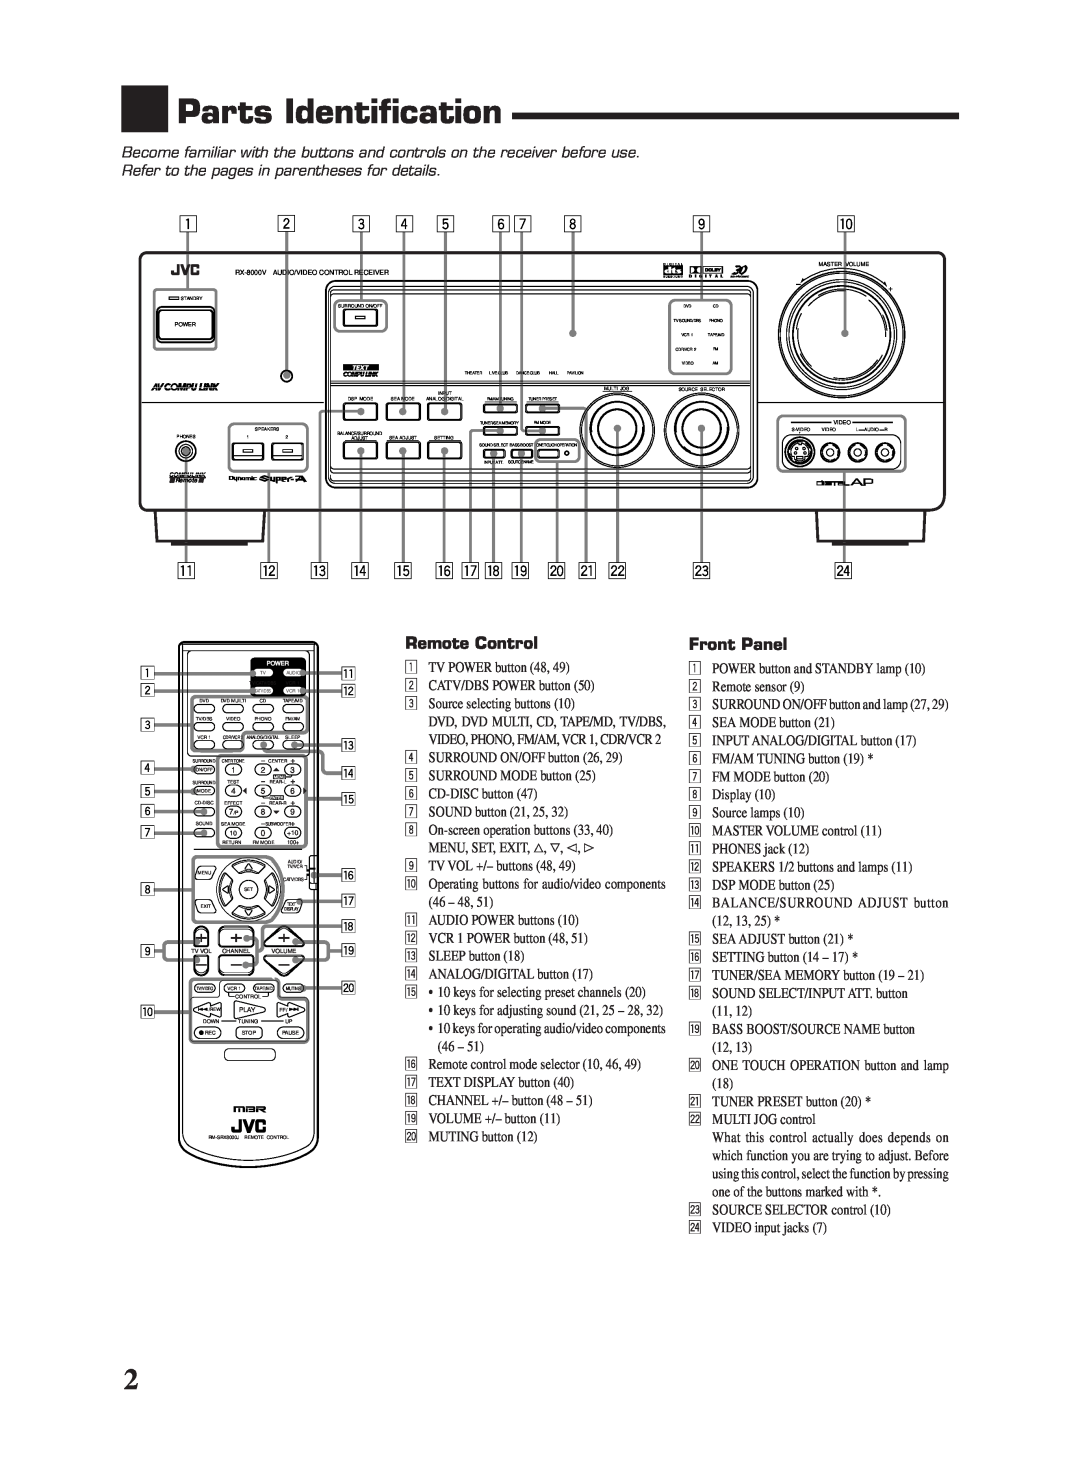 JVC RX-8000VBK manual Parts Identification 